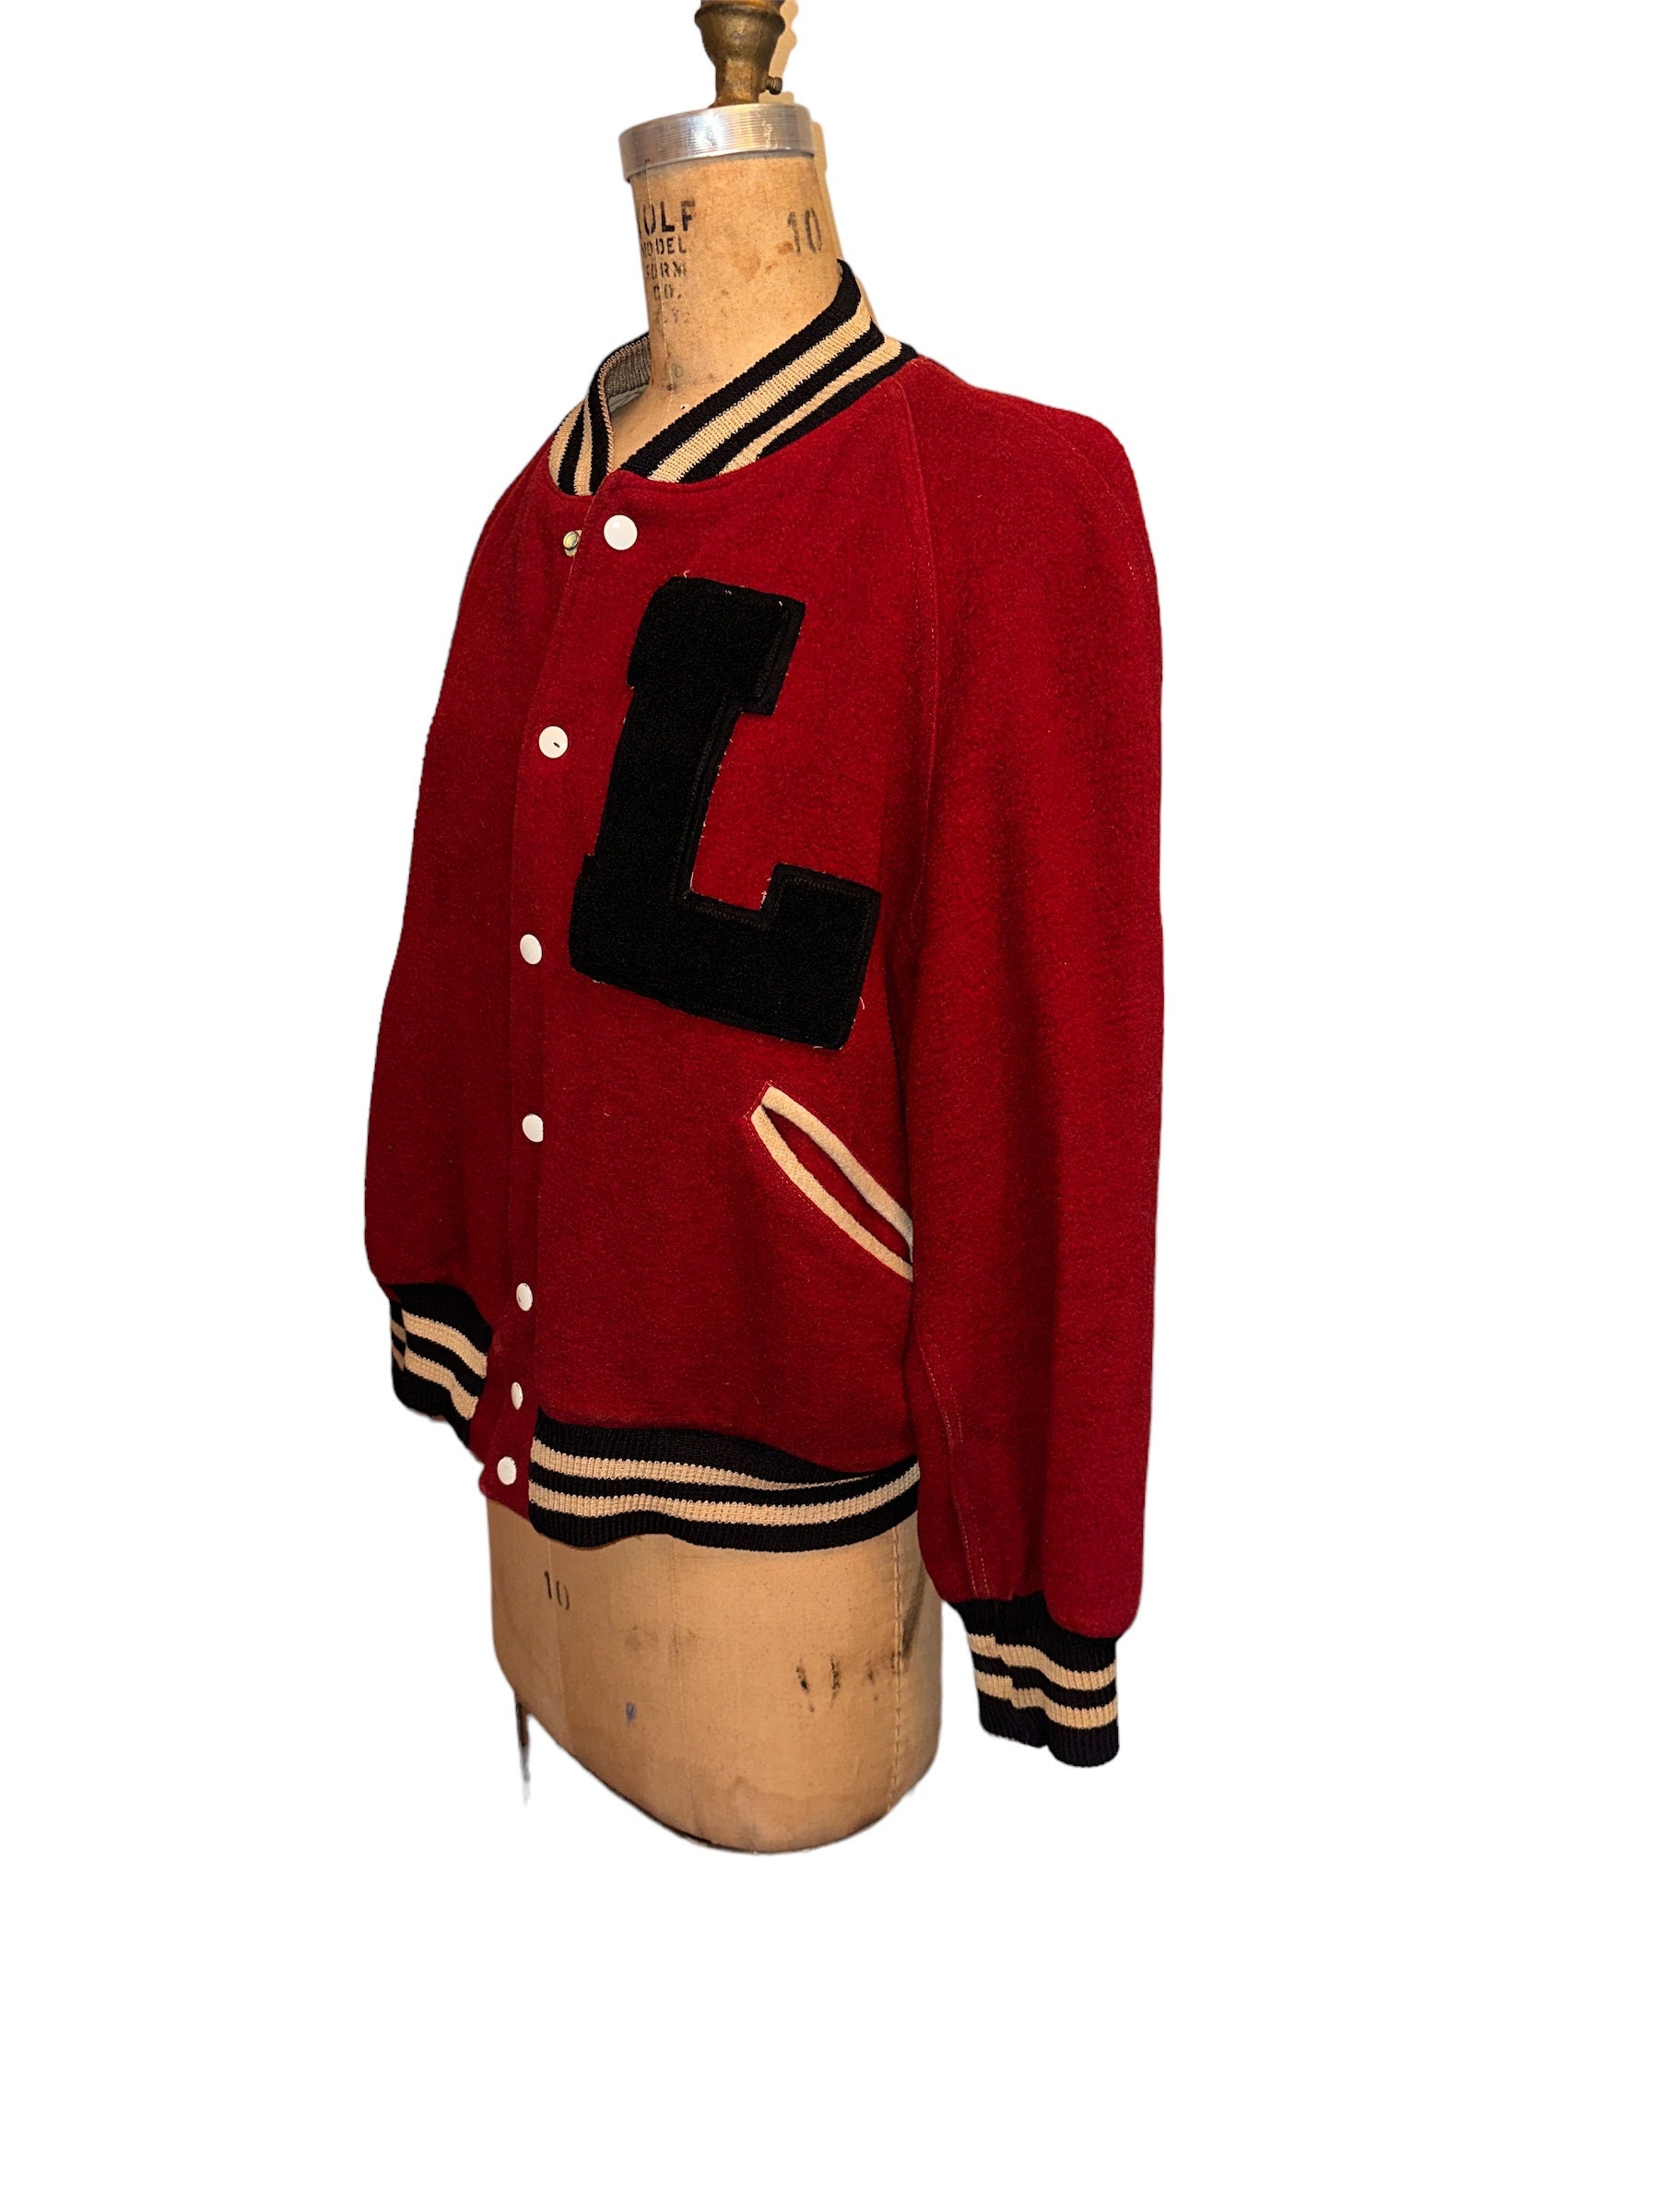 University of Louisville Ladies Full-Zip Jacket, Ladies Pullover Jacket,  Louisville Cardinals Varsity Jackets